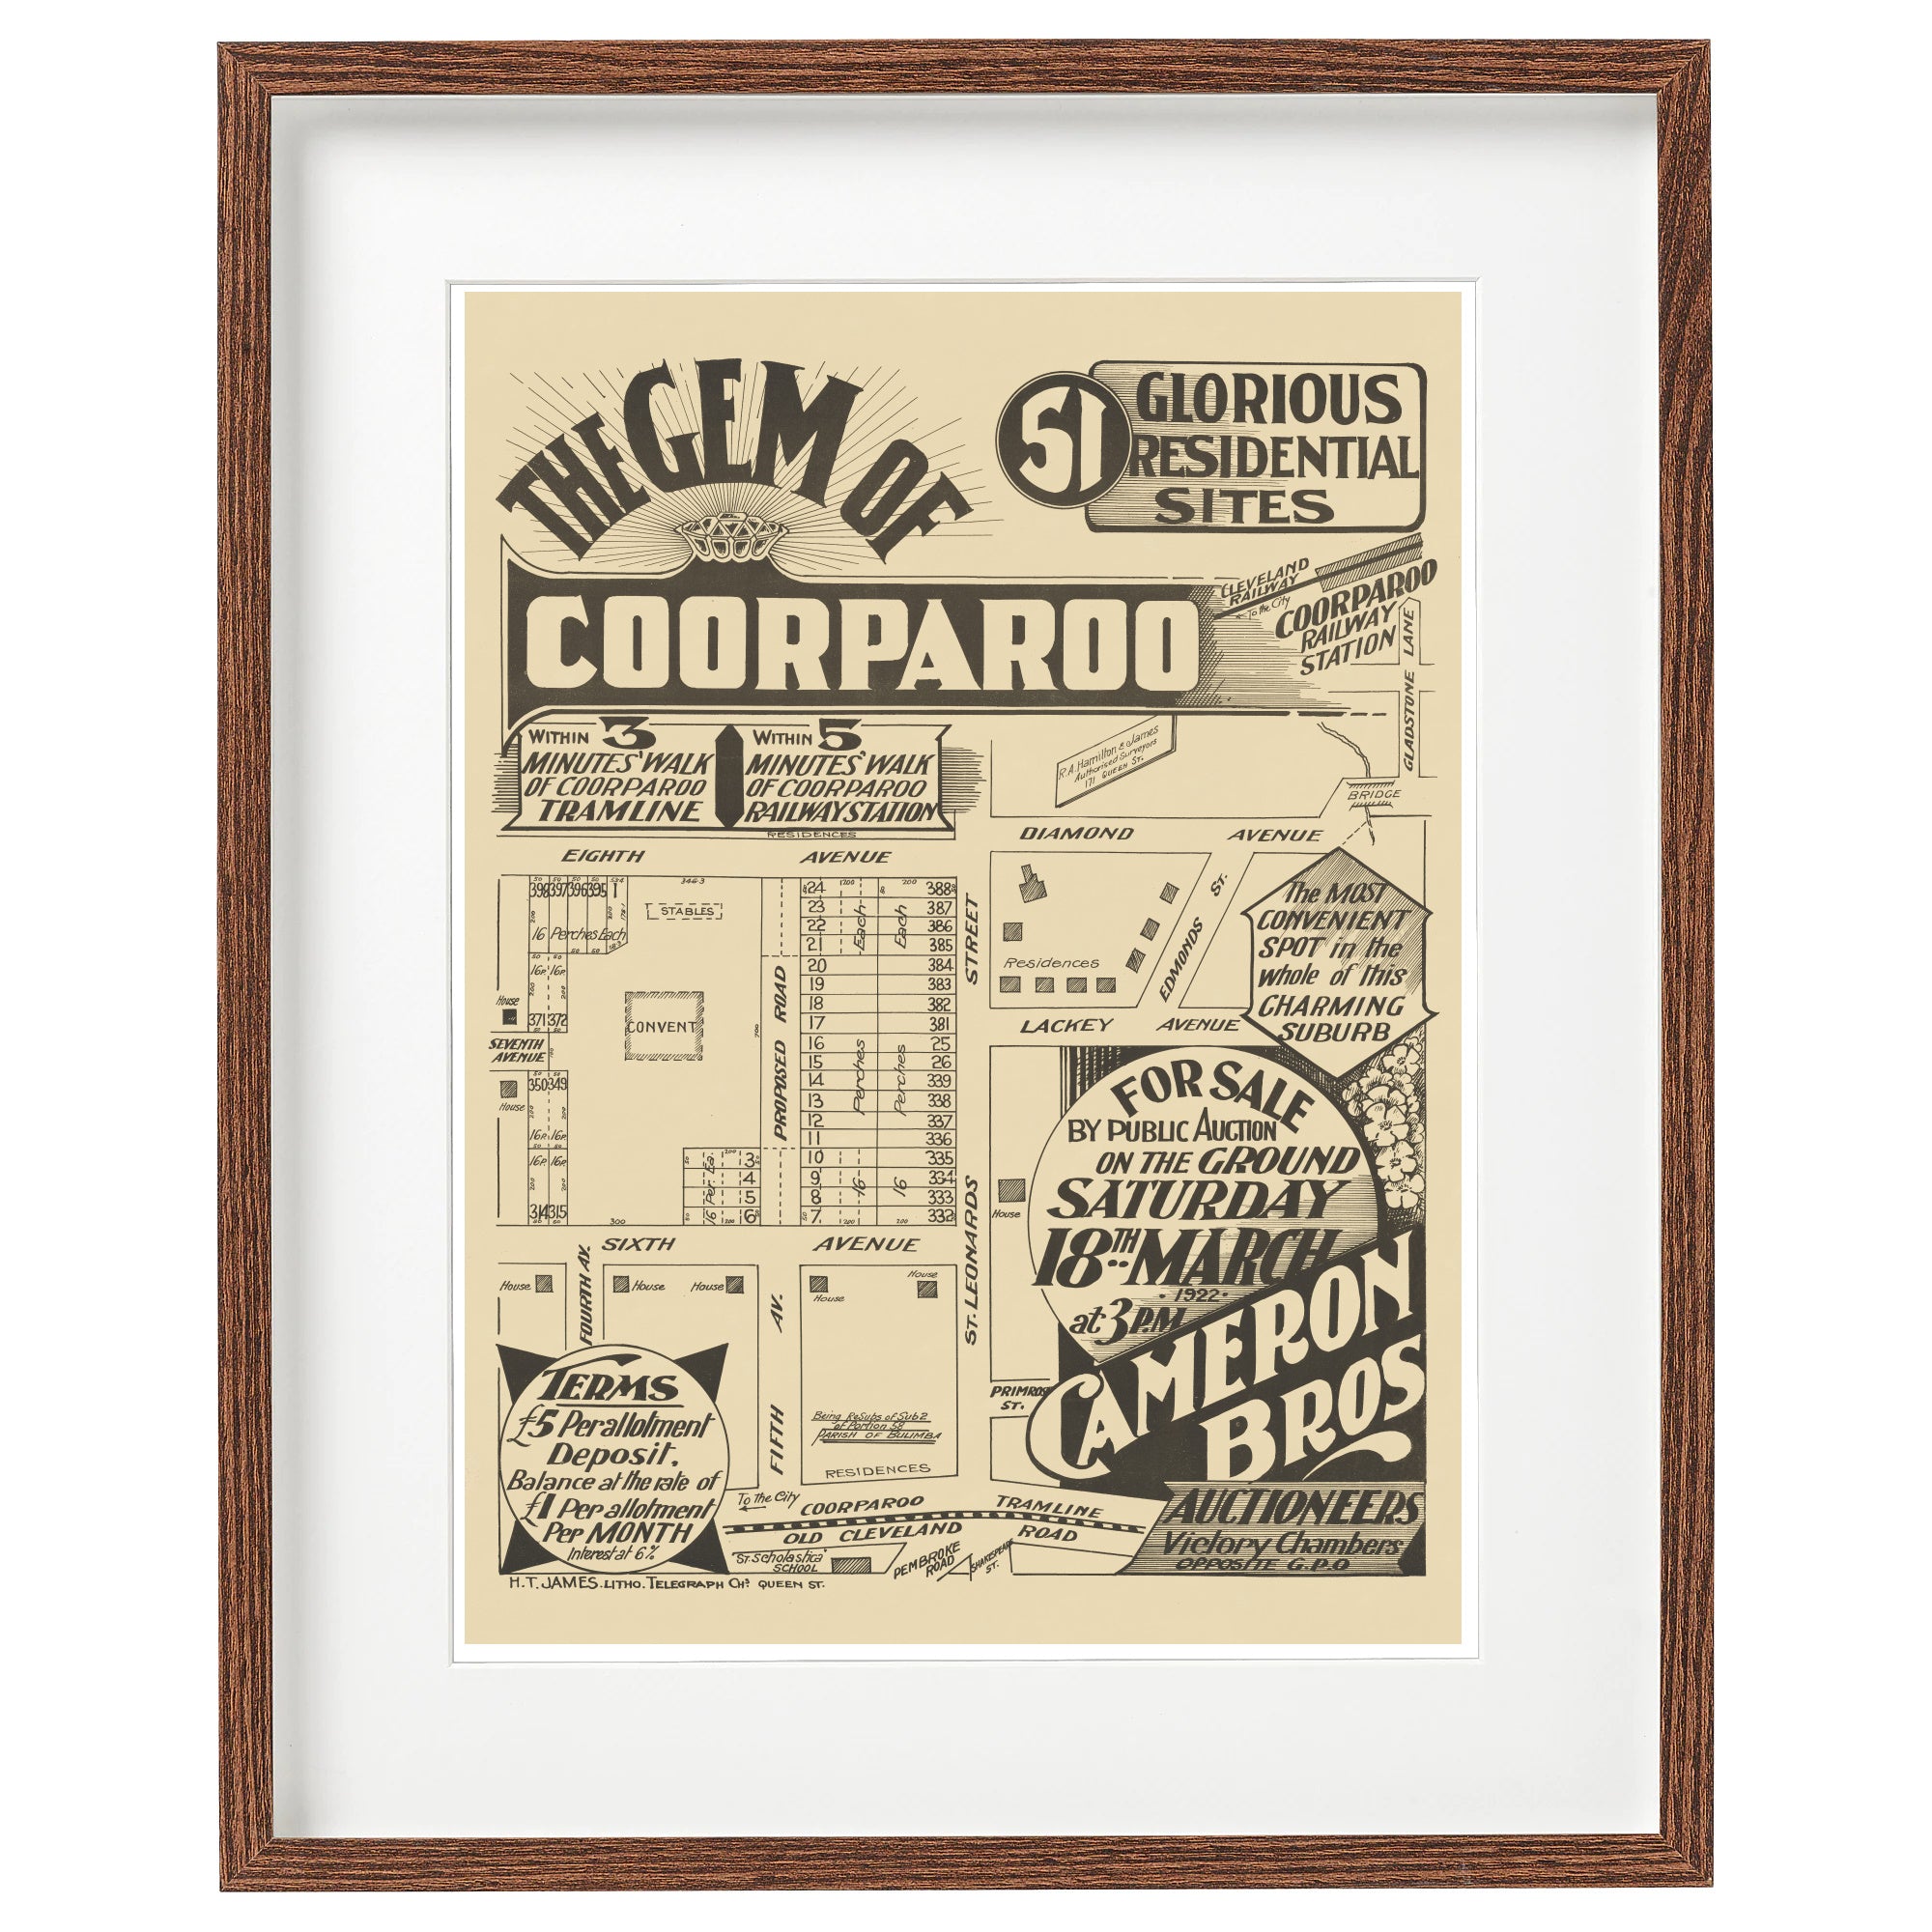 1922 Coorparoo - The Gem of Coorparoo